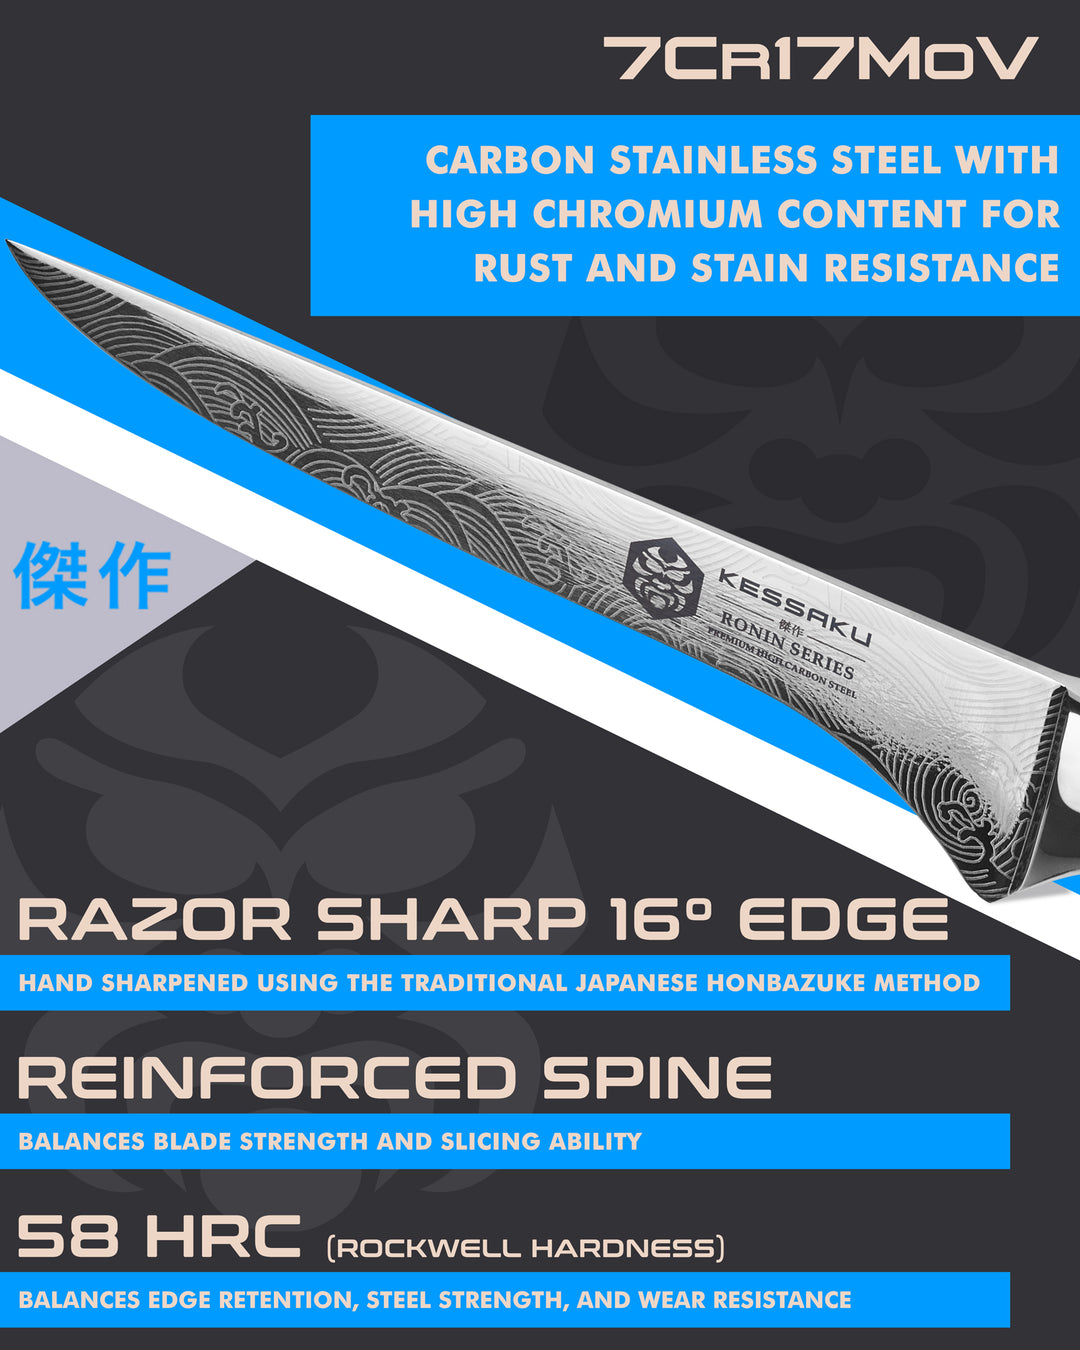 Kessaku Ronin Boning Knife blade features: 7Cr17MoV steel, 58 HRC, 16 degree edge, reinforced spine